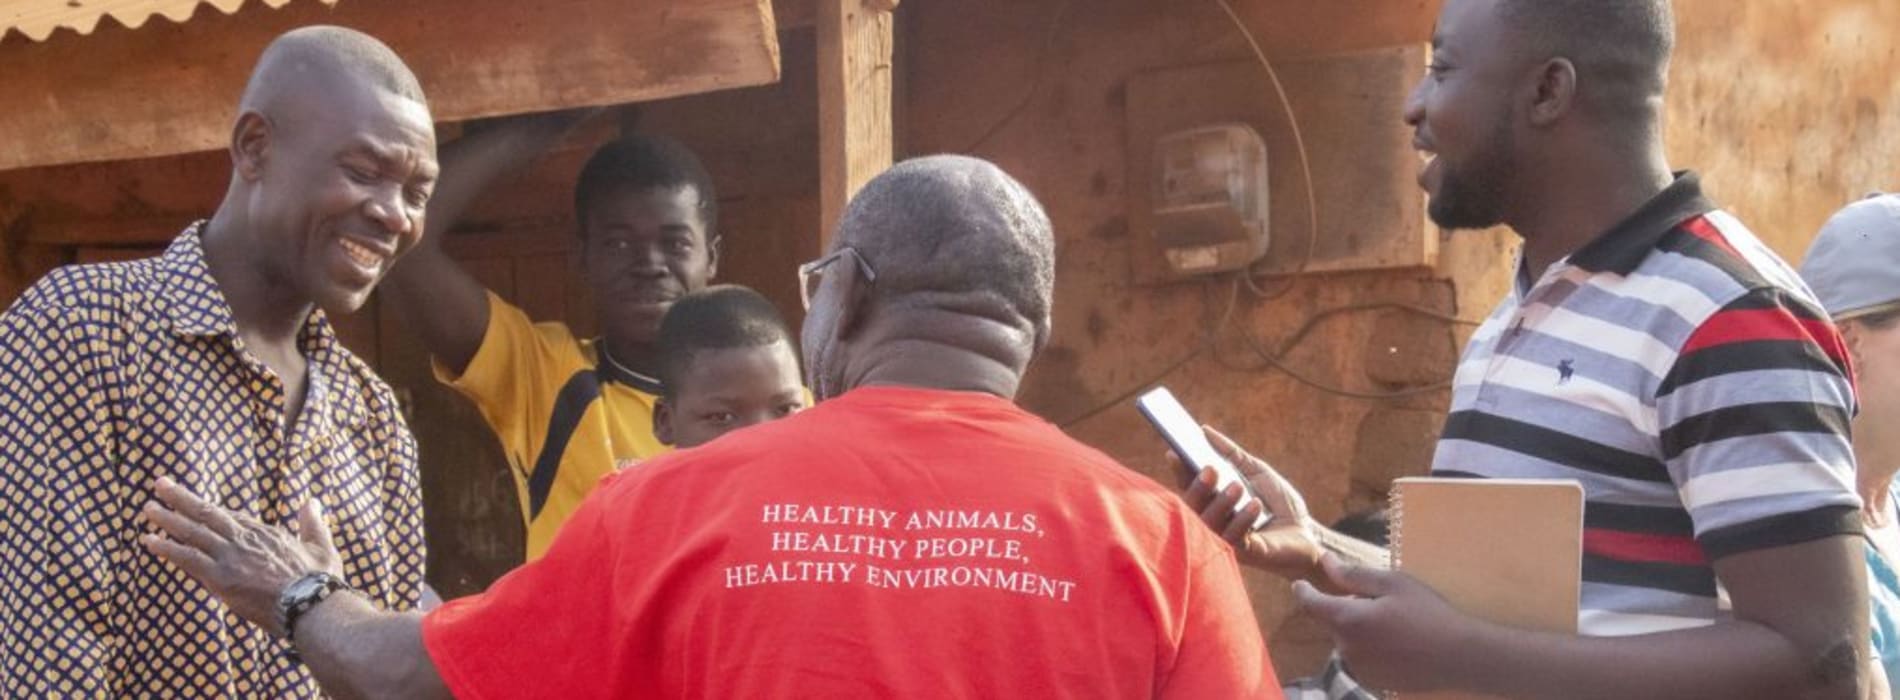 Importance of Livestock Health Efforts Following COVID-19 in Rural Ghana | VWB Blog